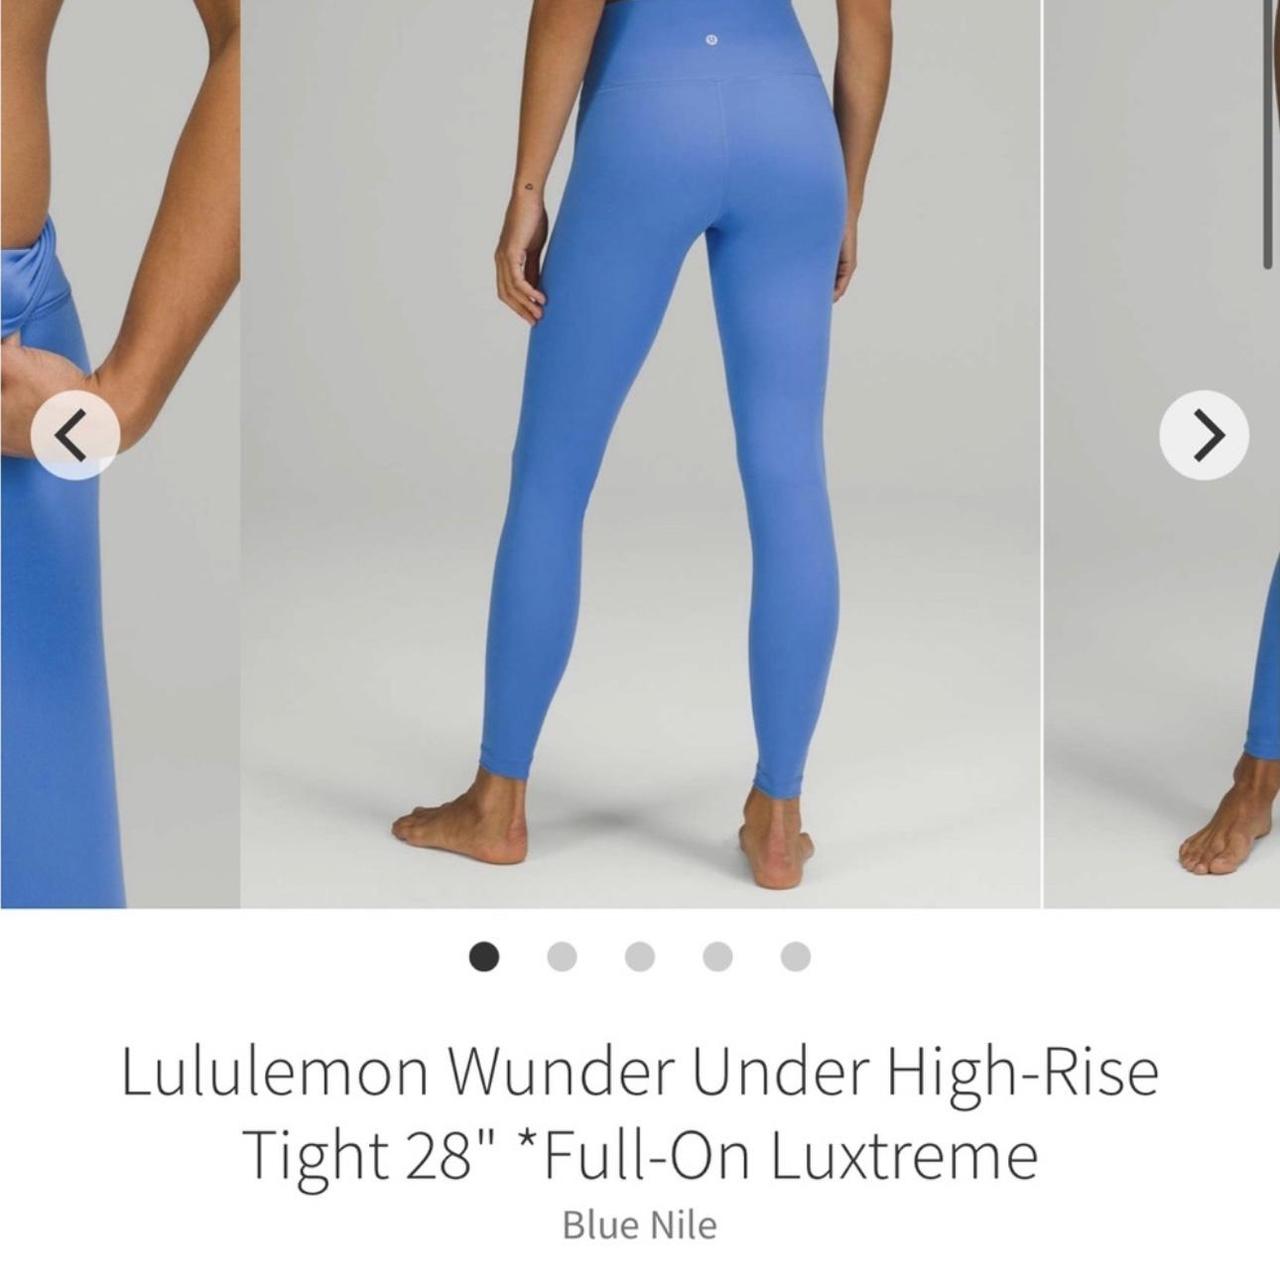 Lululemon Wunder Under High-Rise Tight 28 *Full-On Luxtreme